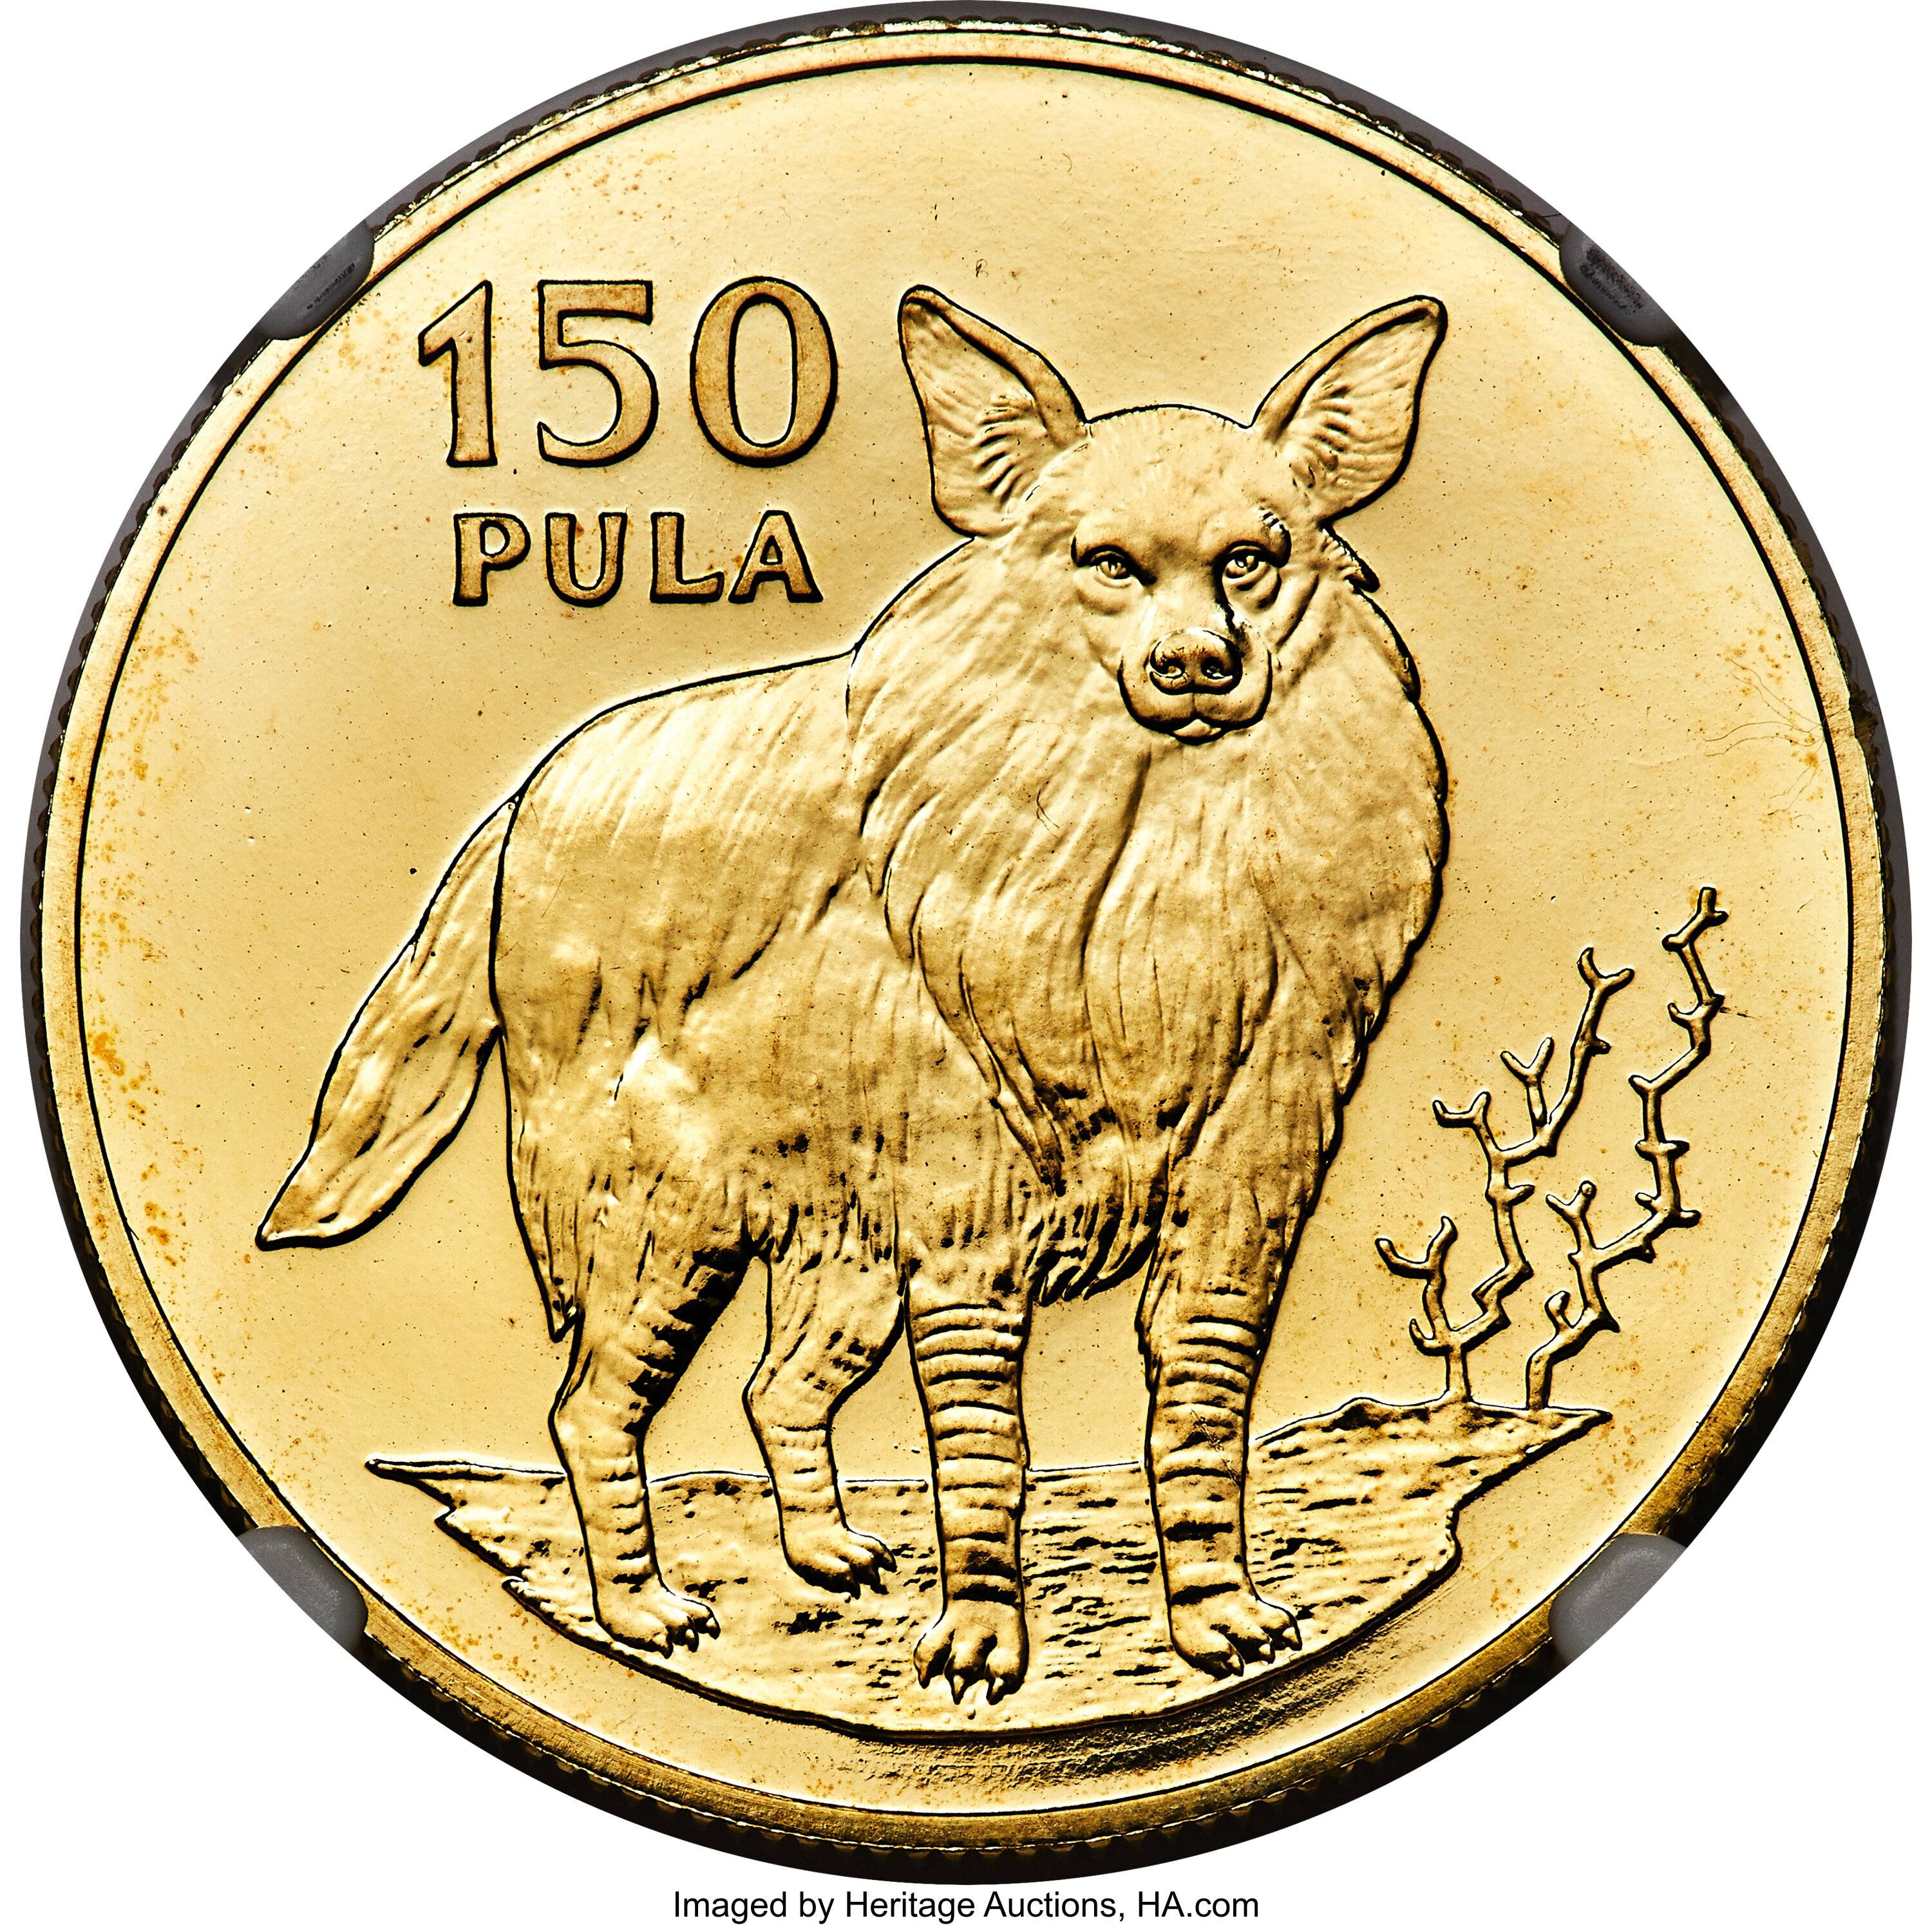 150 pula - Loup